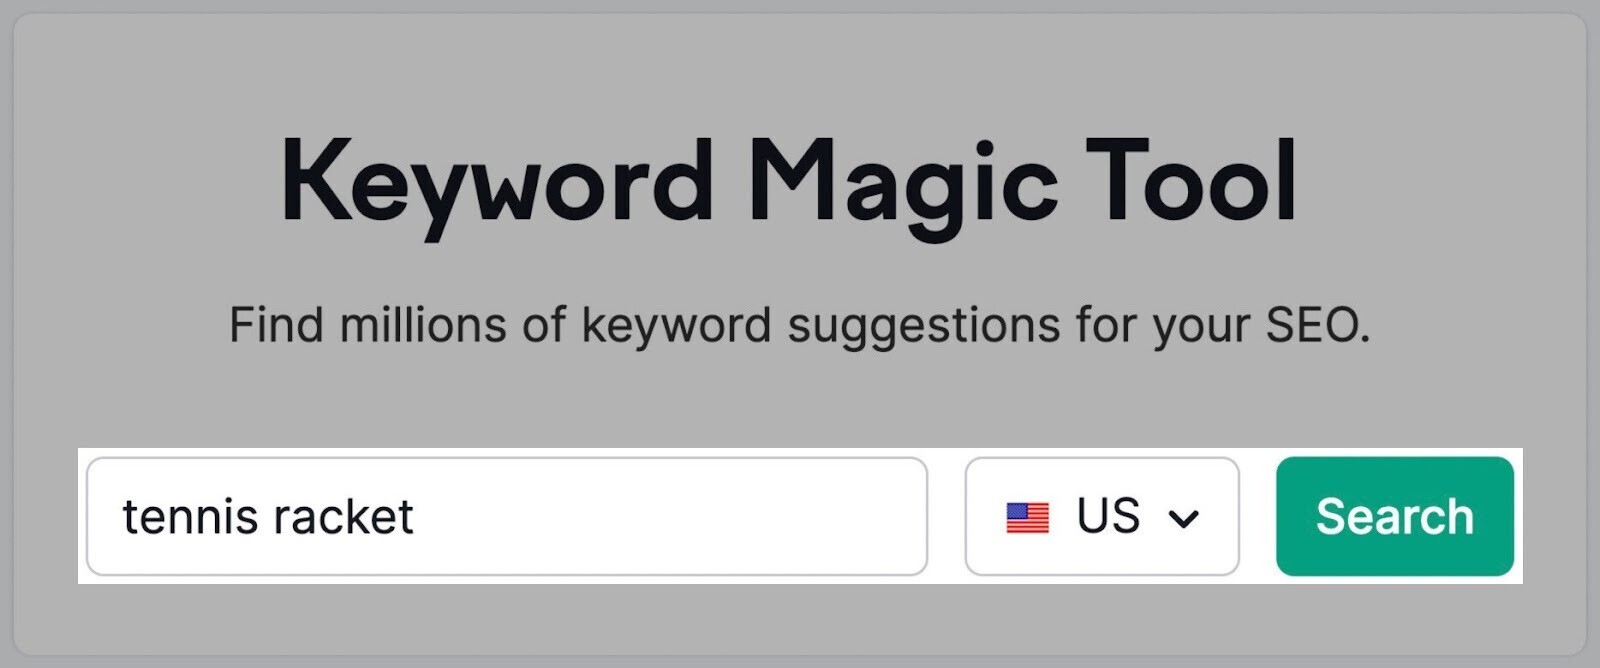 "tennis racket" entered in Keyword Magic Tool search bar